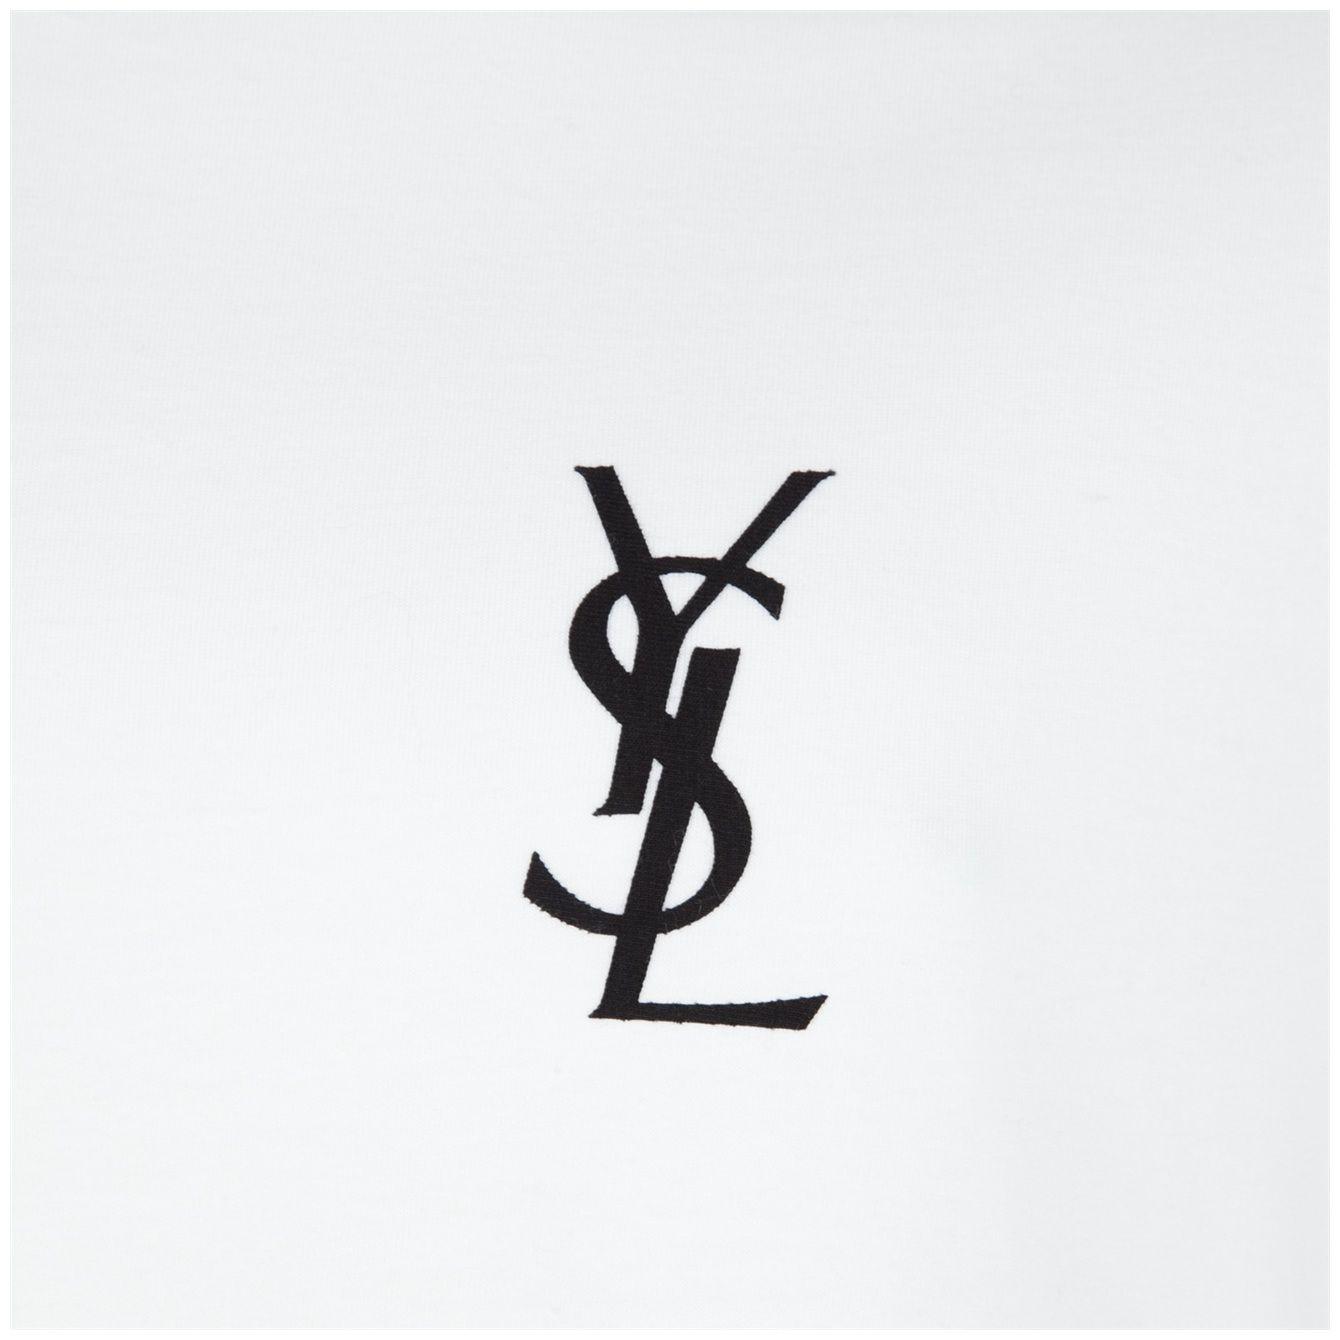 Logo Louis Vuitton - Louis Vuitton Ysl Logo Clipart (3484x1258), Png  Download